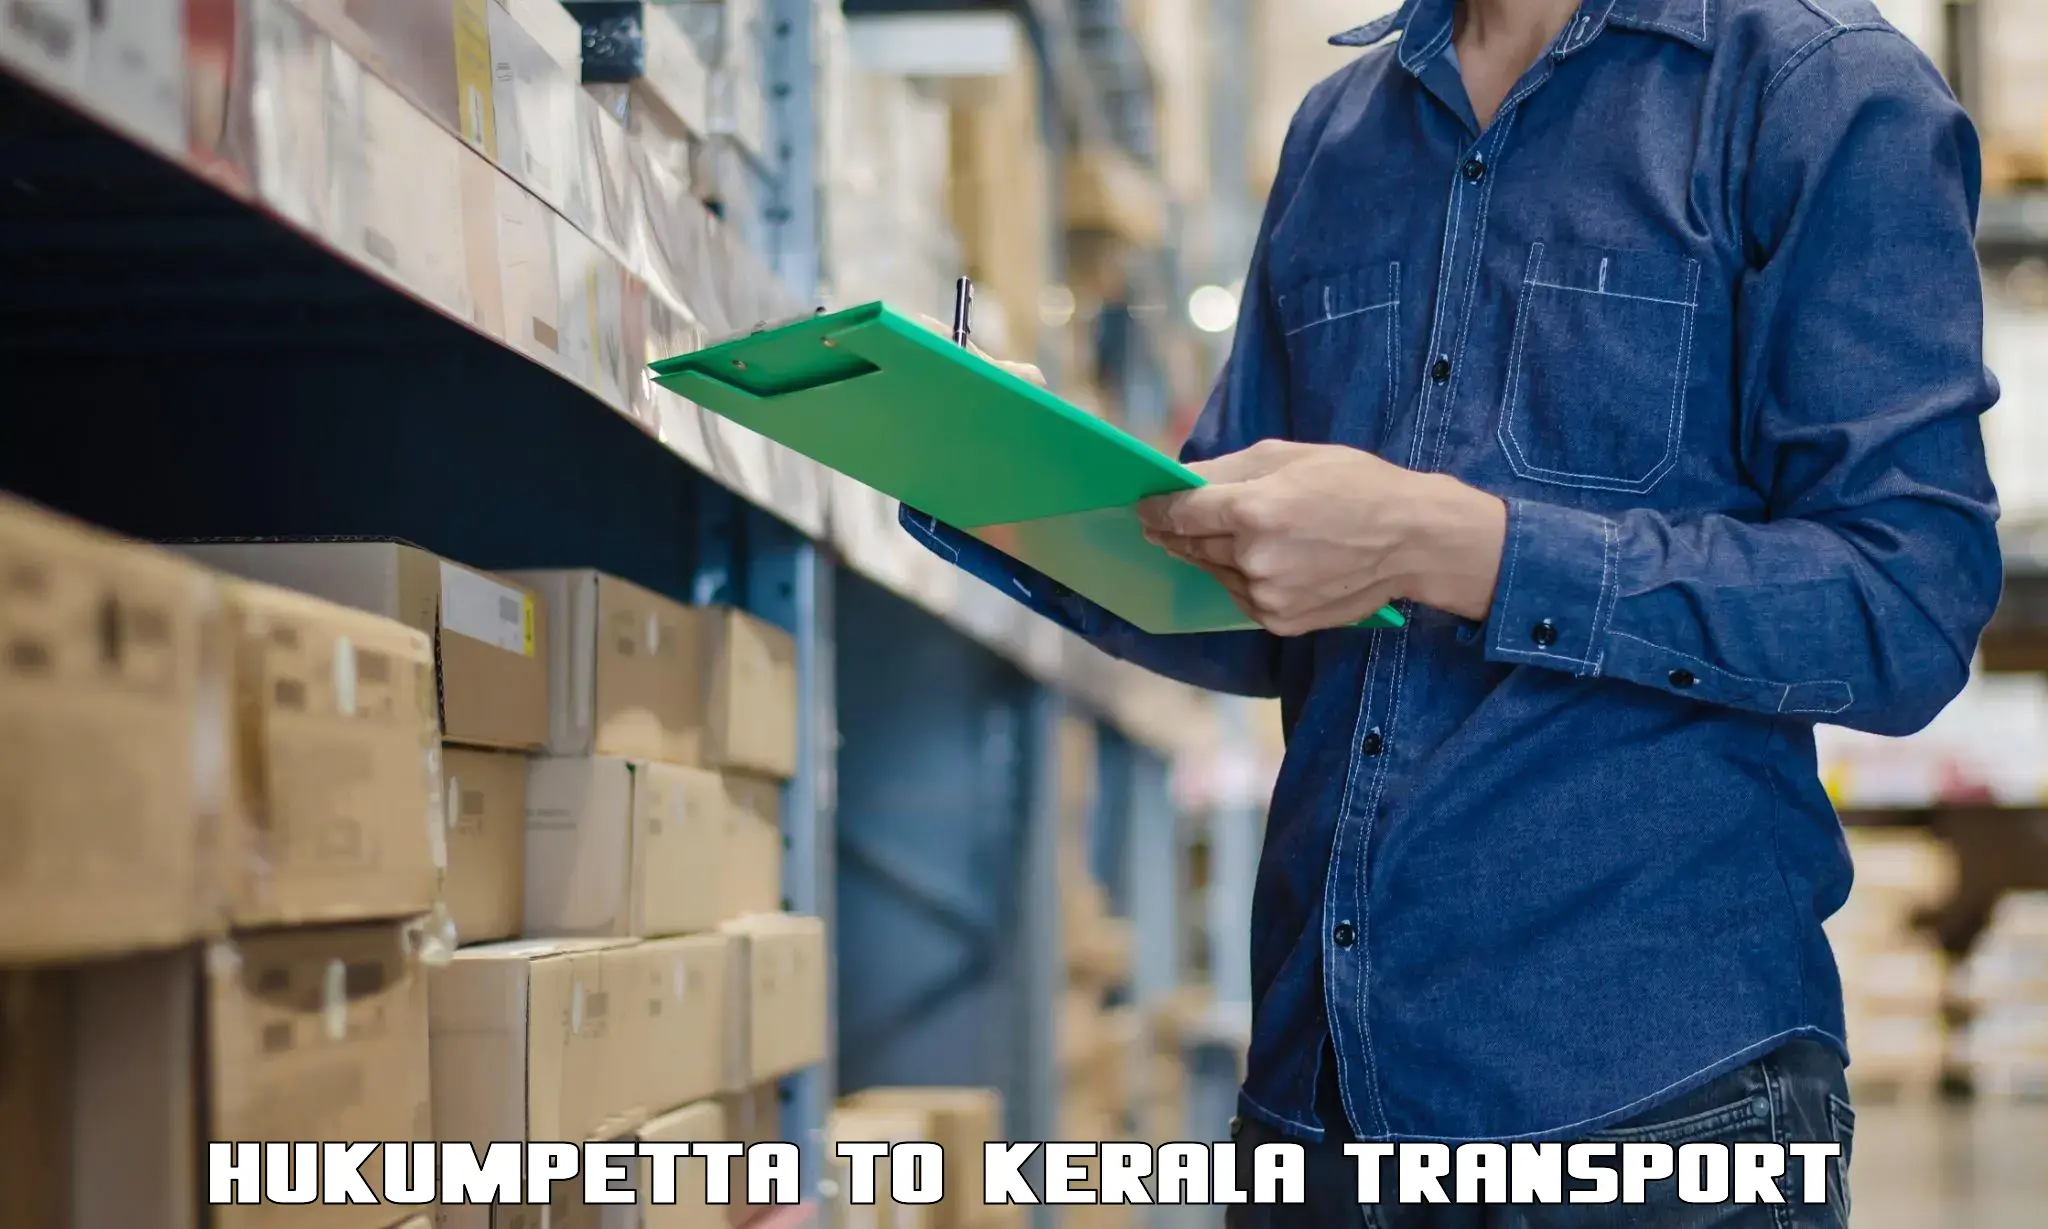 Commercial transport service Hukumpetta to Sreekandapuram